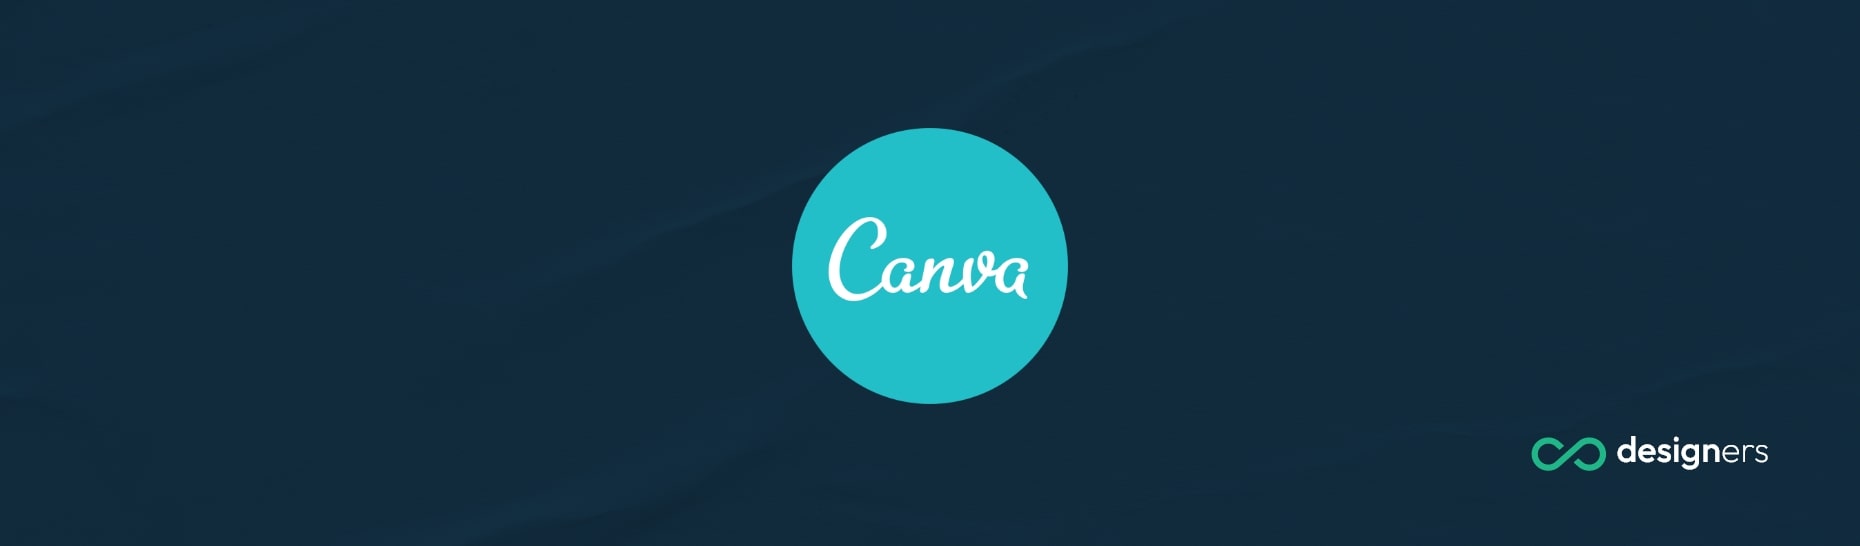 Does Canva Have Lifetime Subscription?